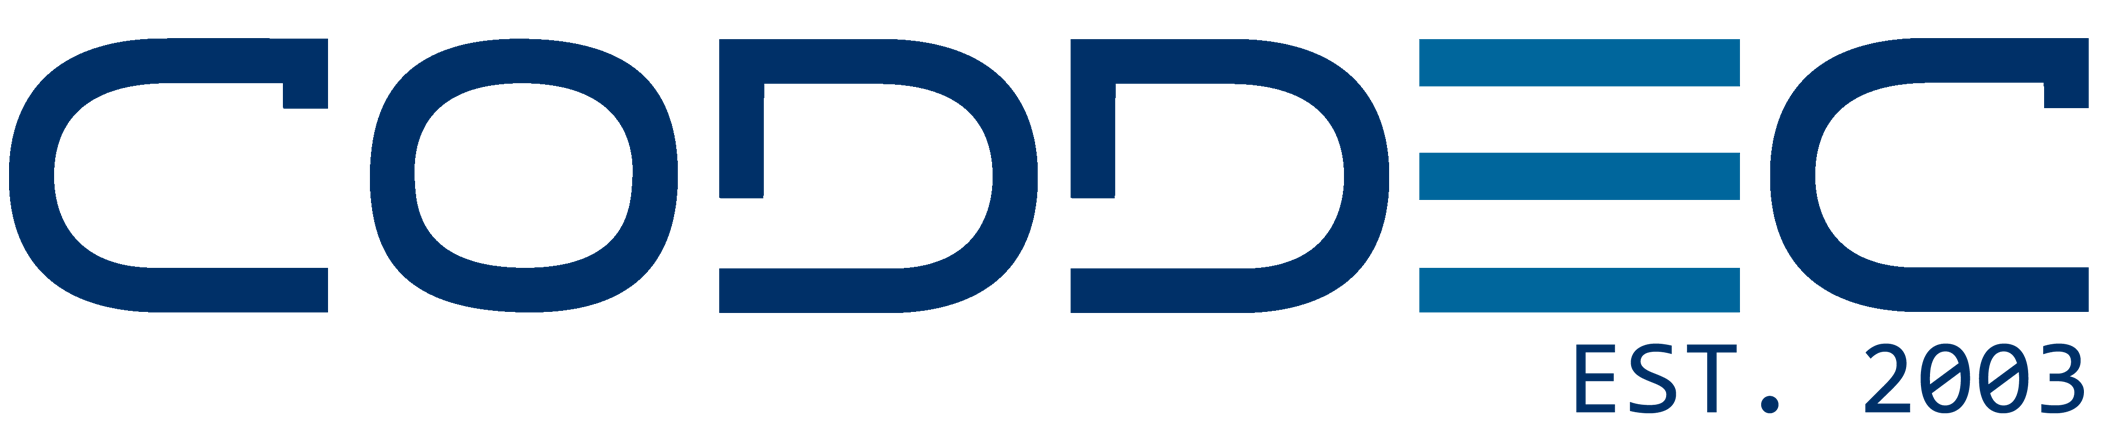 logotipo coddec